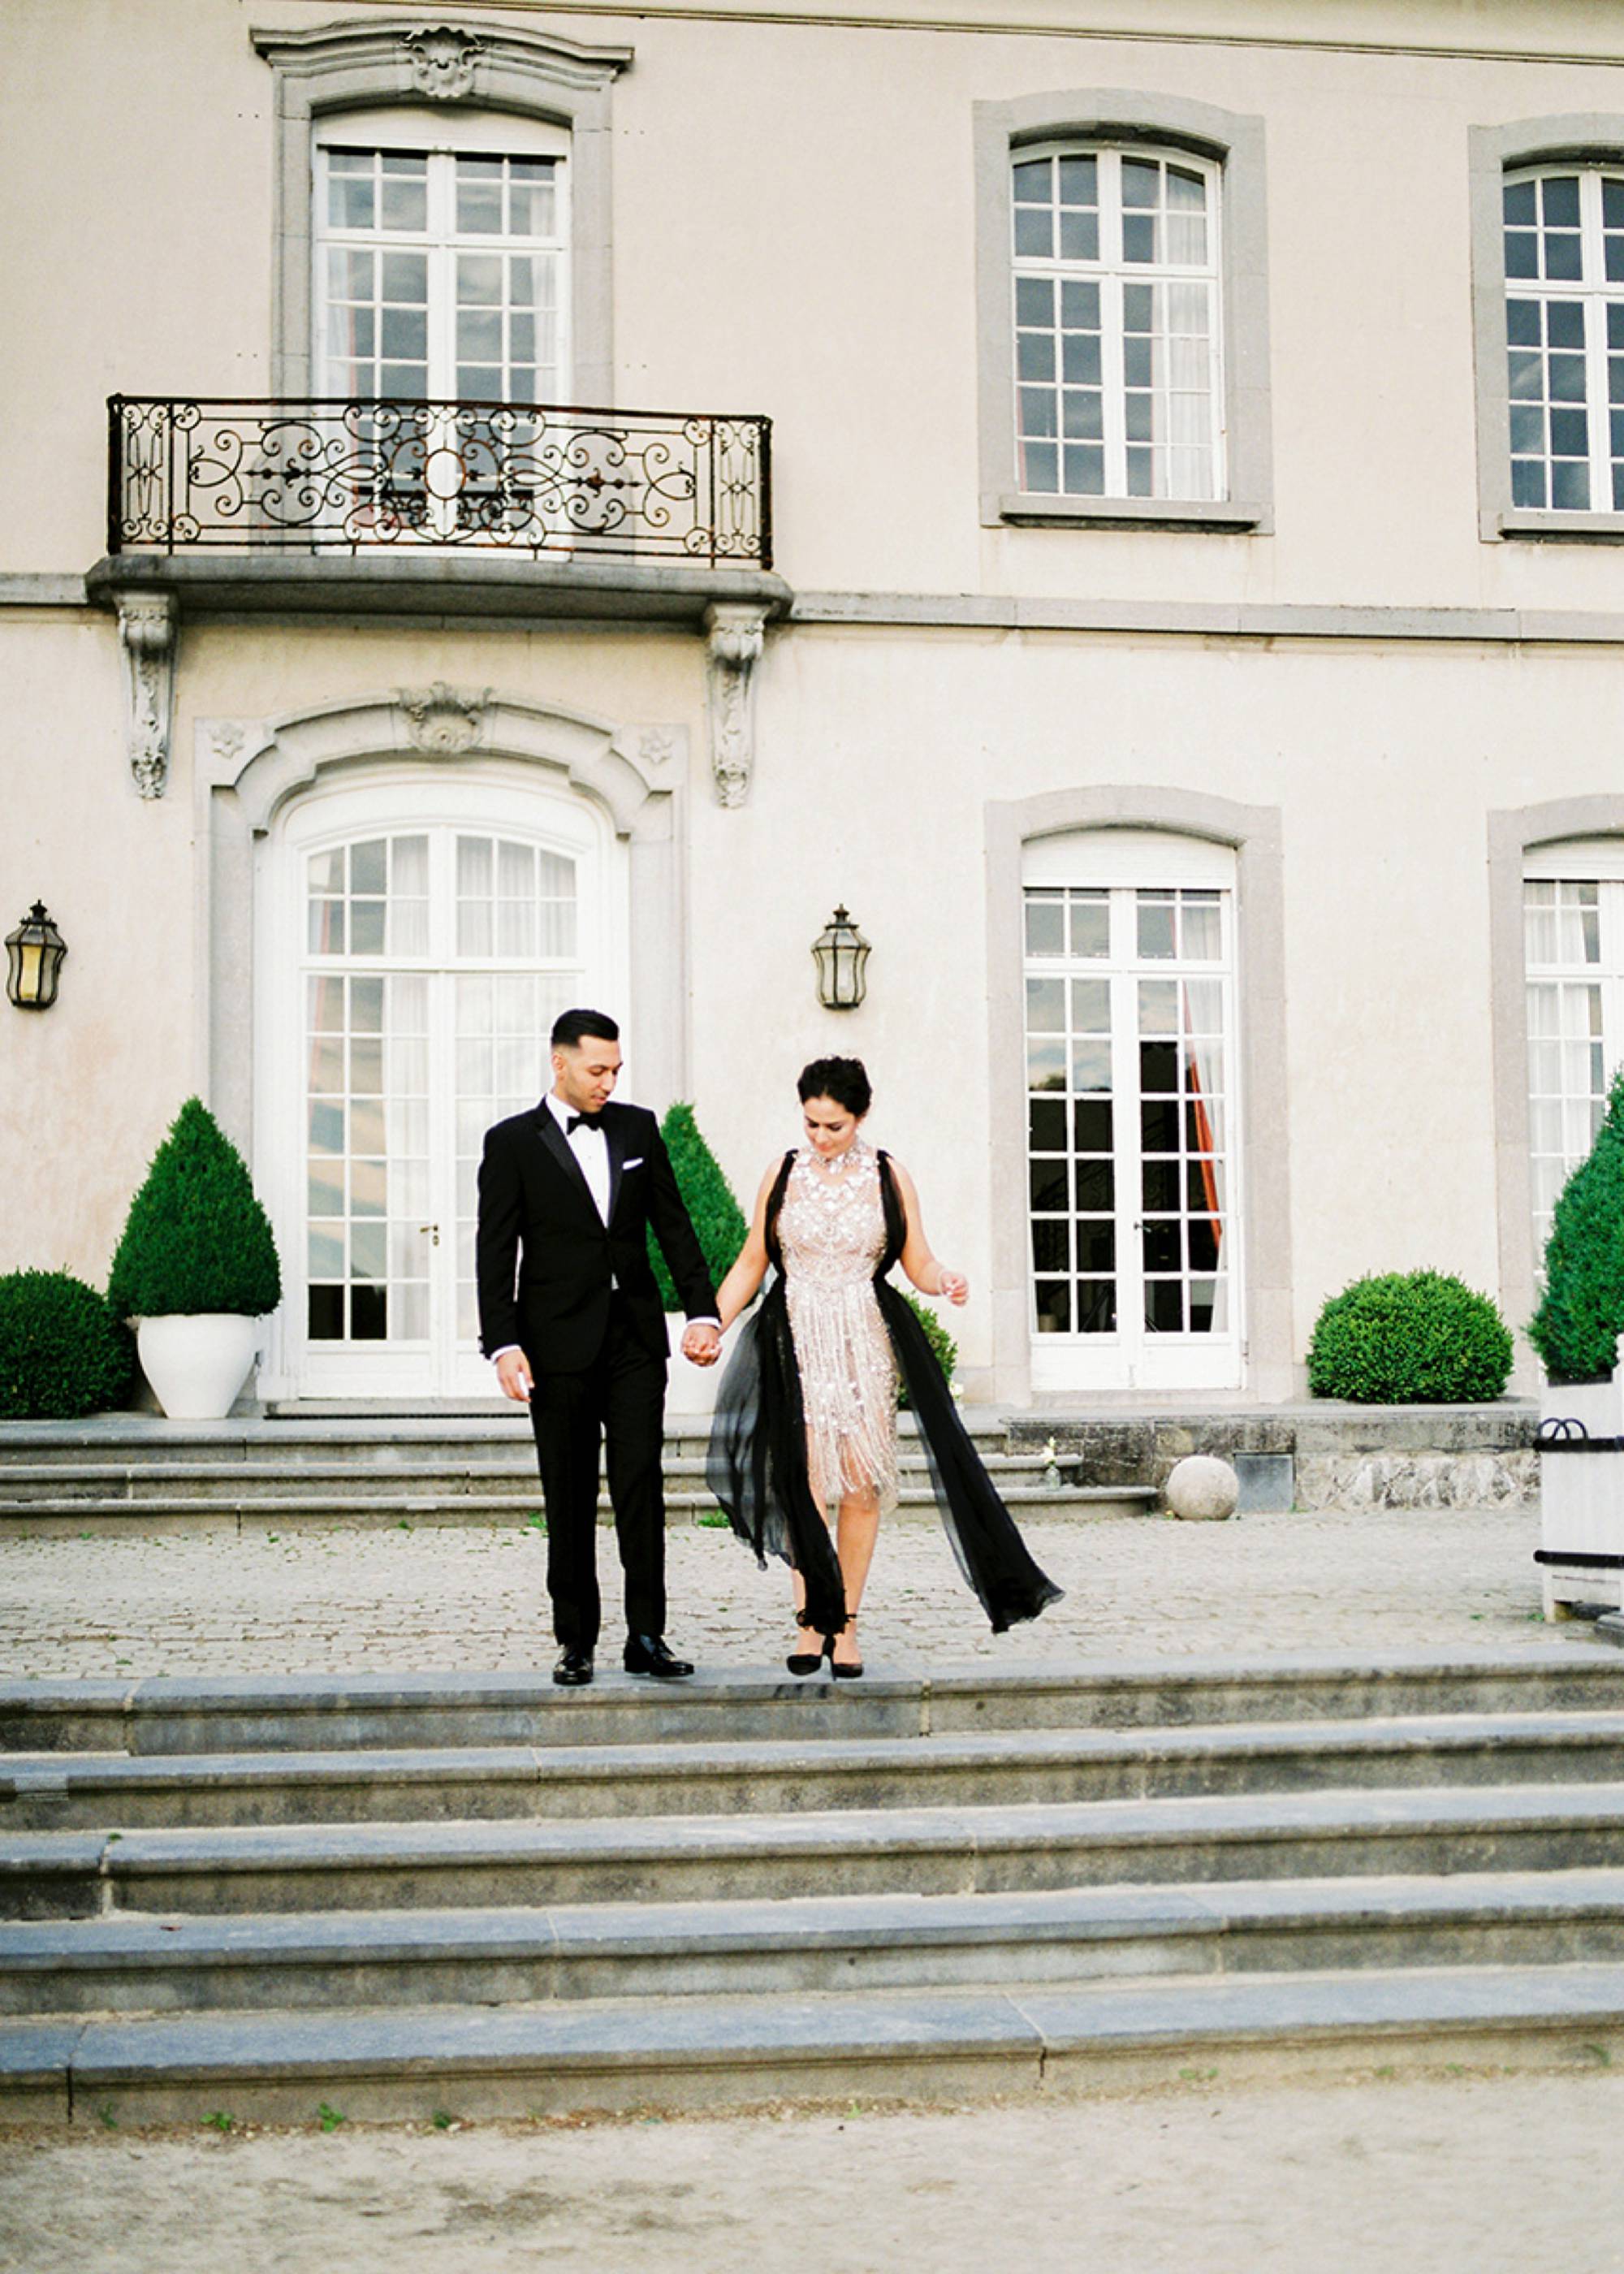 Wedding photographer Belgium - Bride and groom portrait